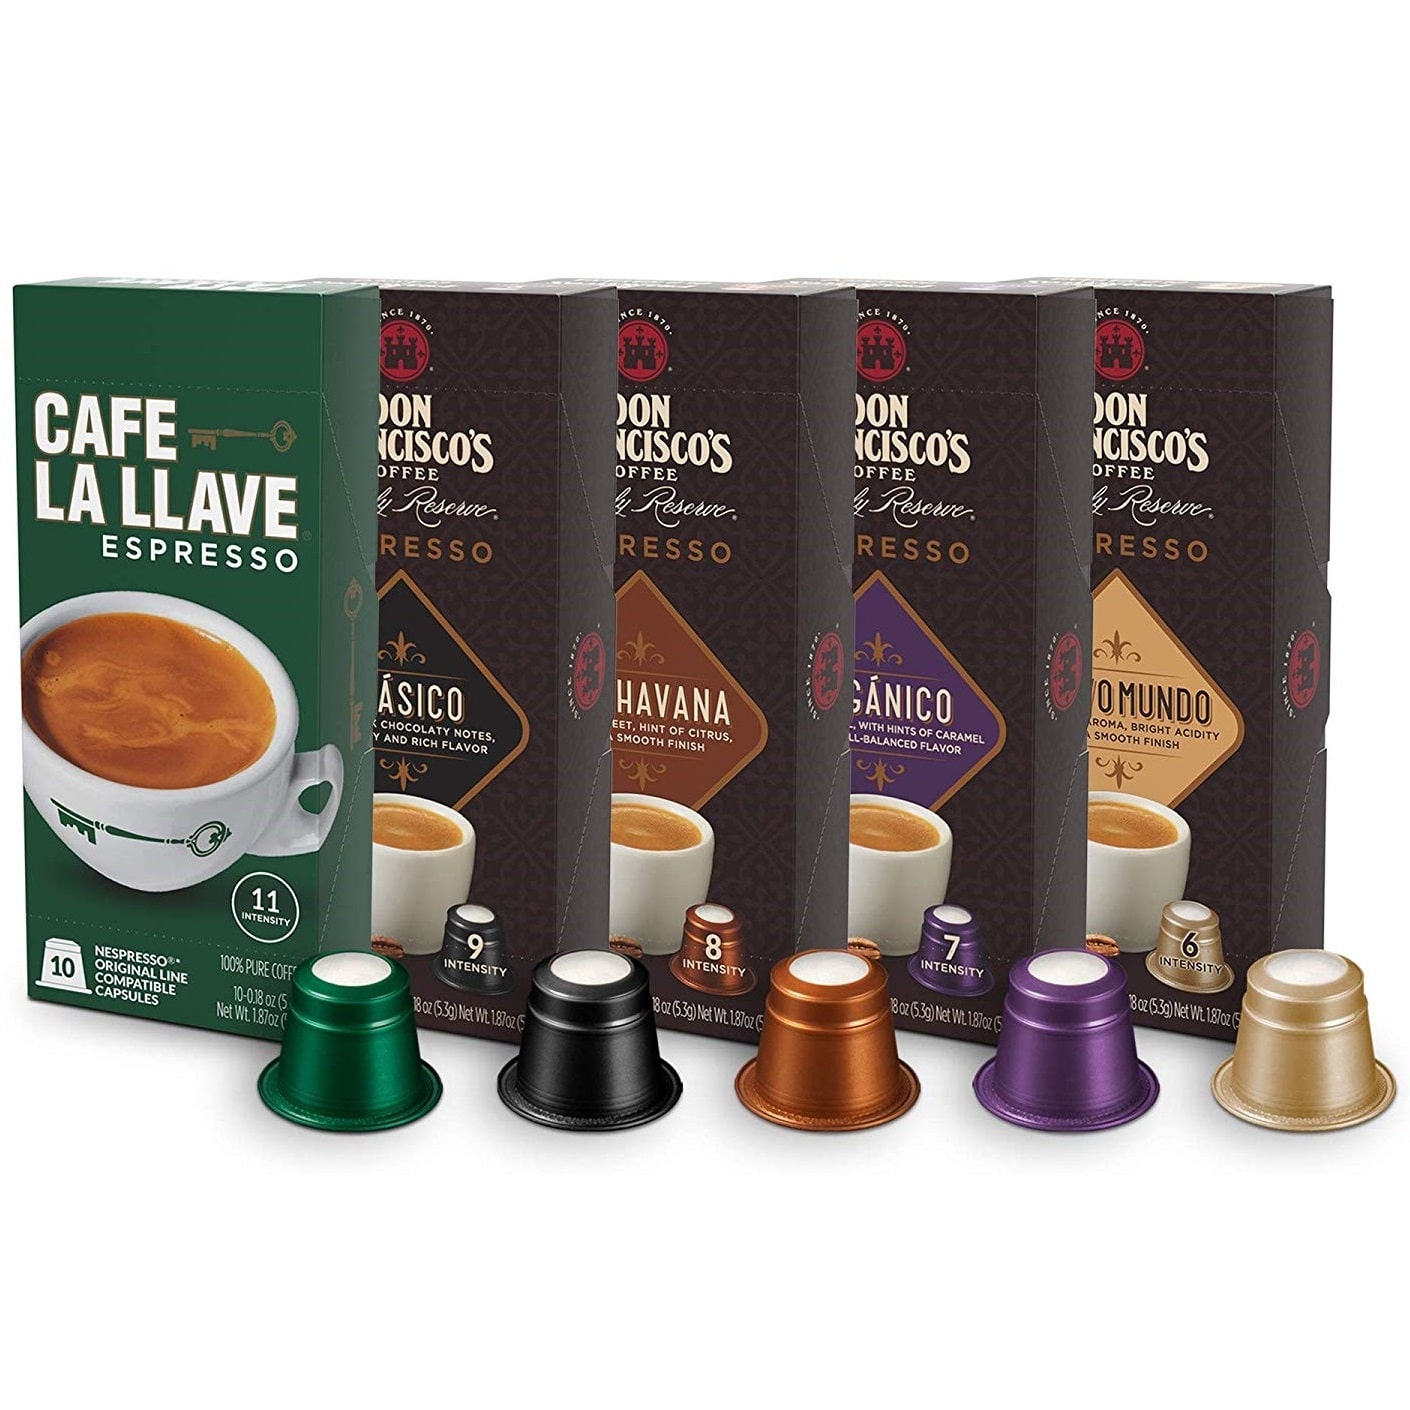 Don Francisco's and Café La llave Espresso Capsules Variety Pack